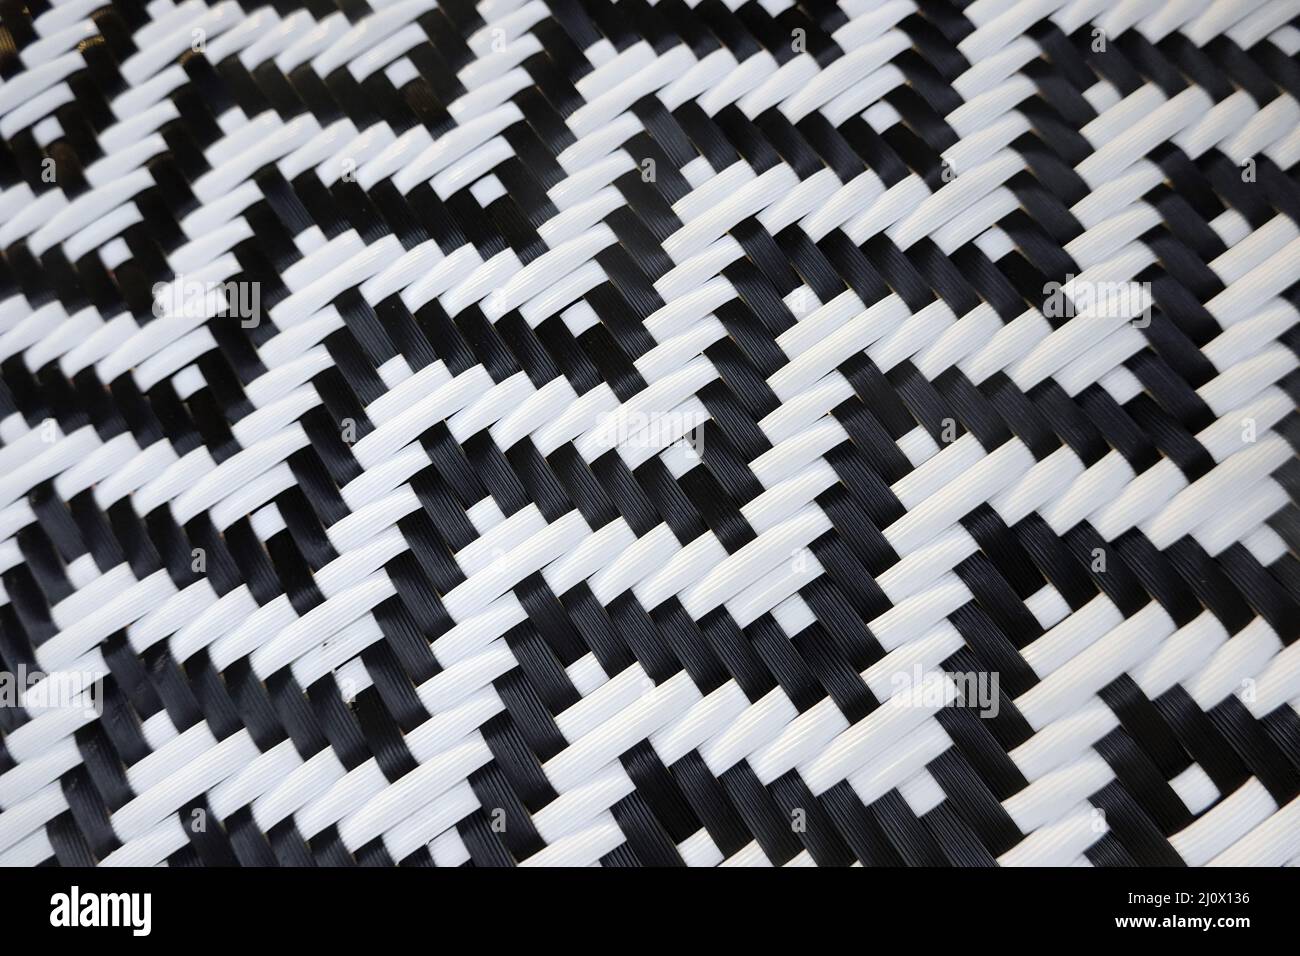 Black and white zigzag pattern Stock Photo